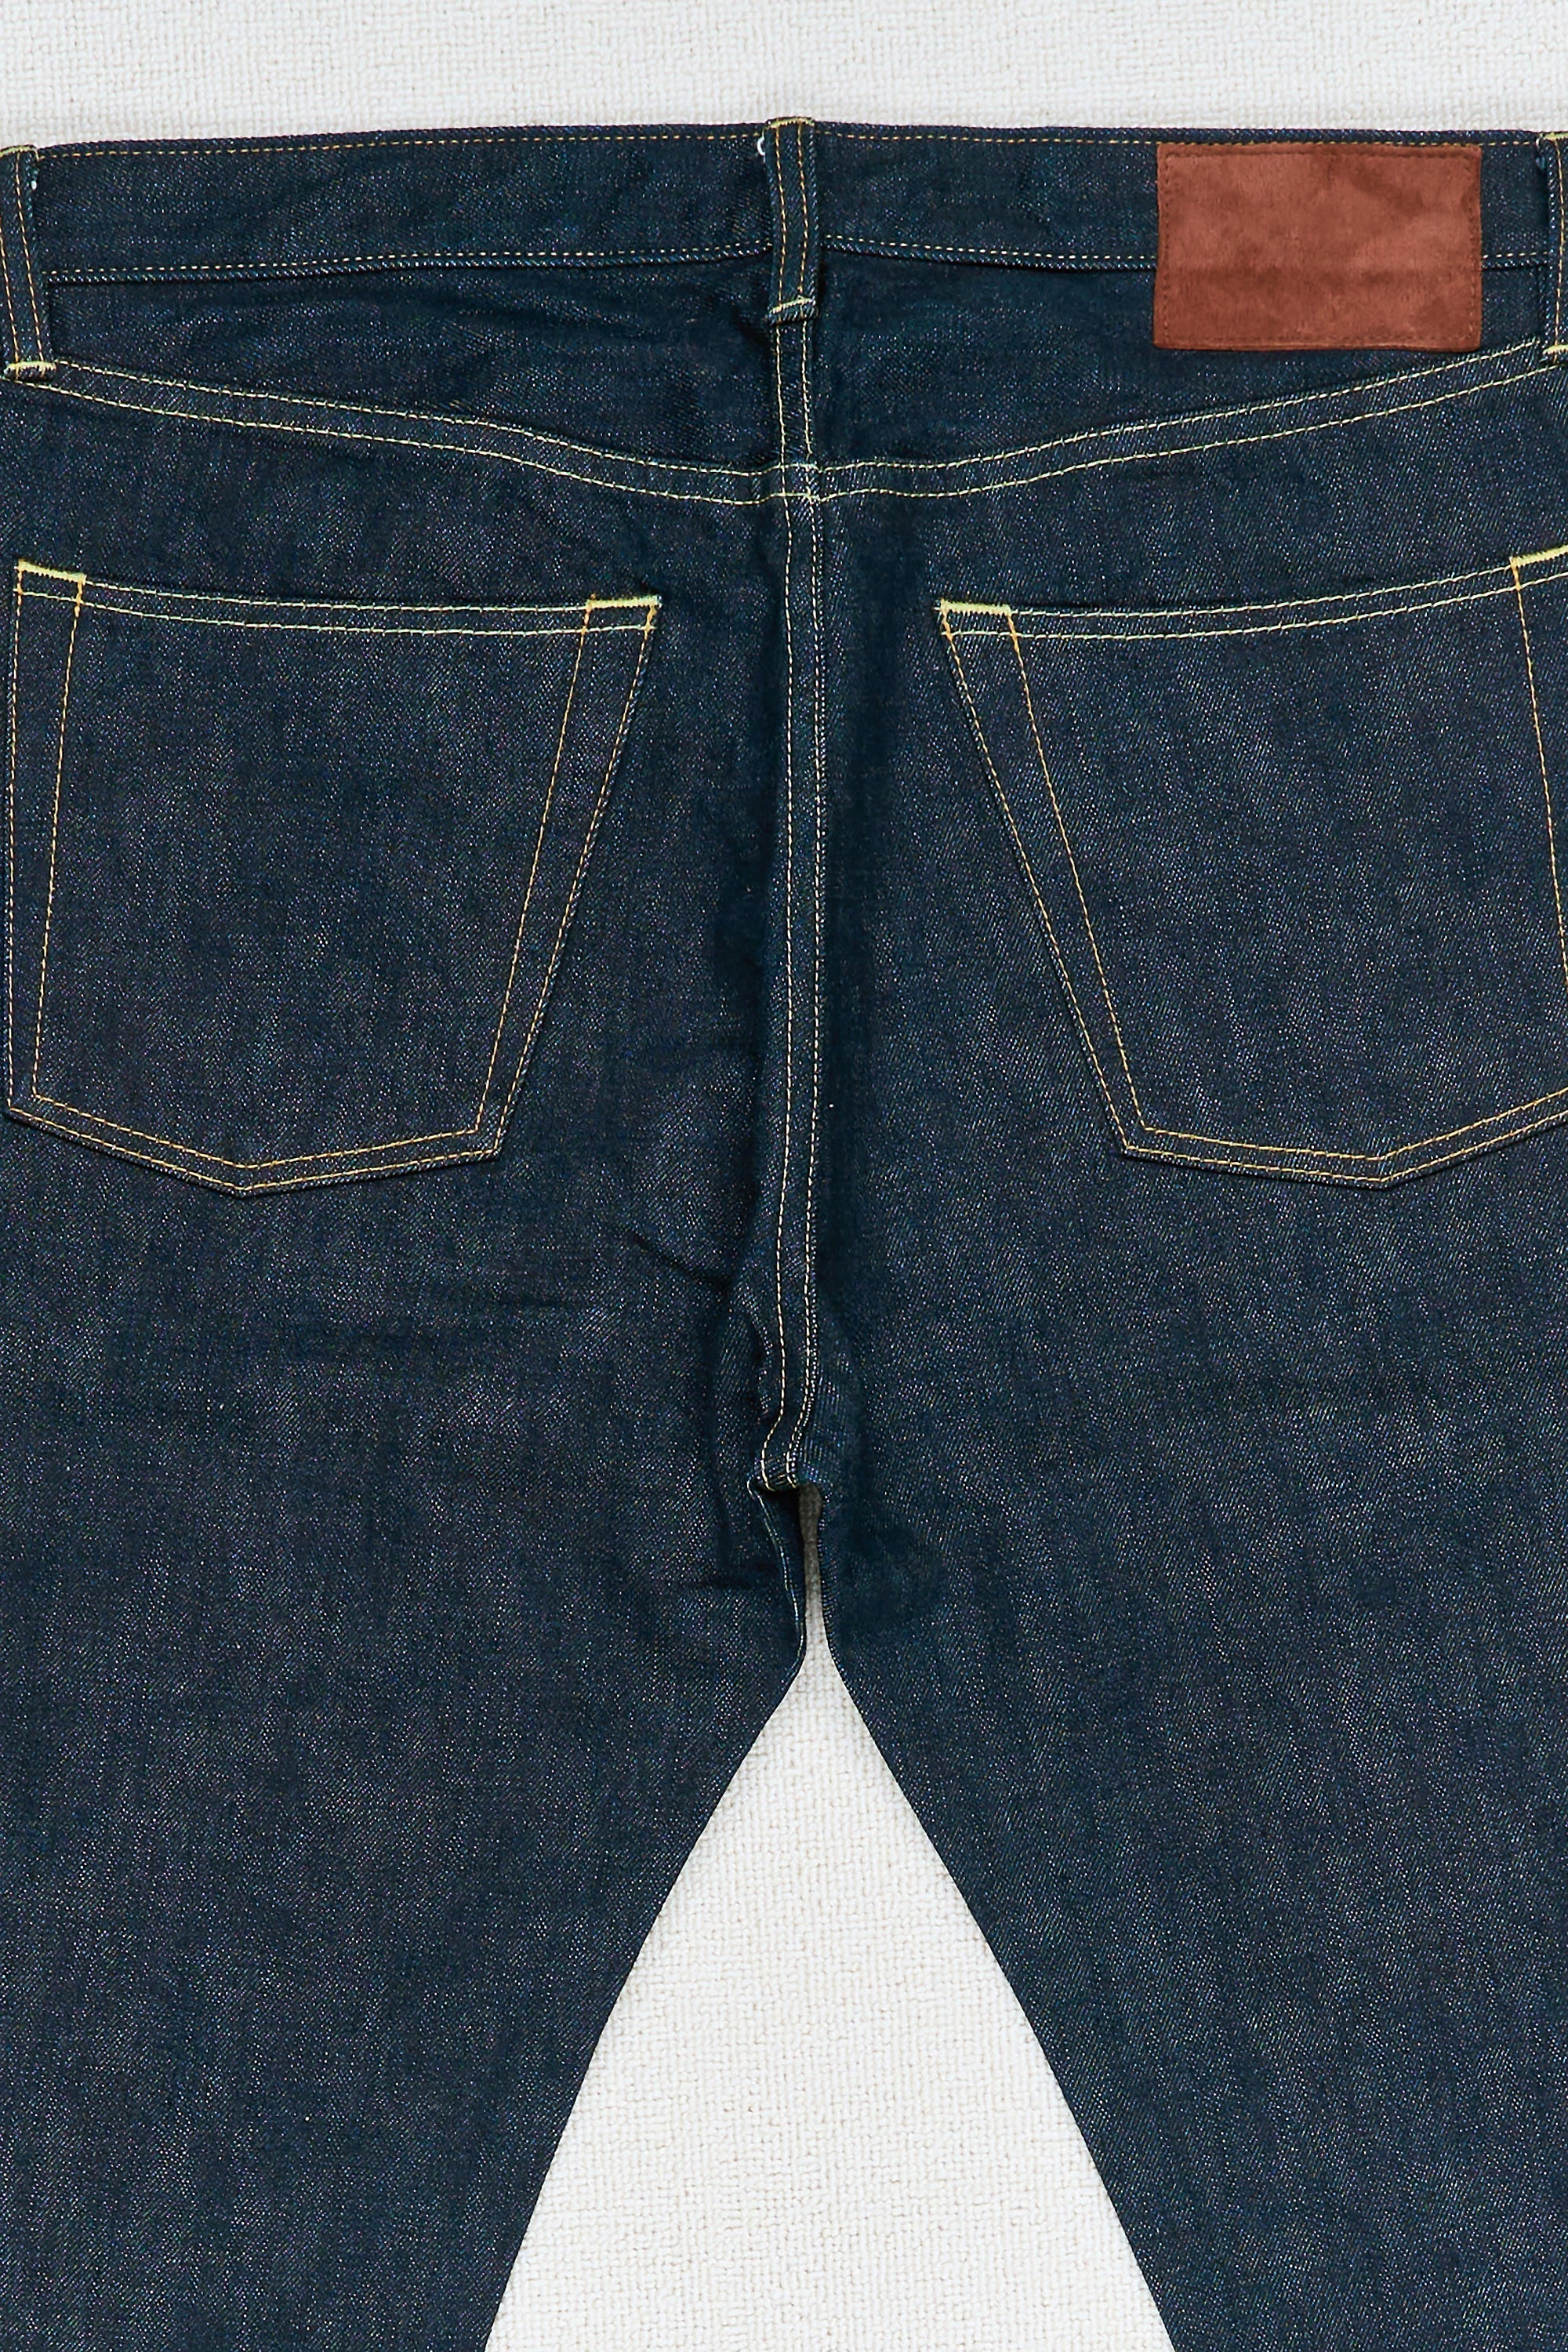 The Armoury 60s Classic Indigo Denim Jeans